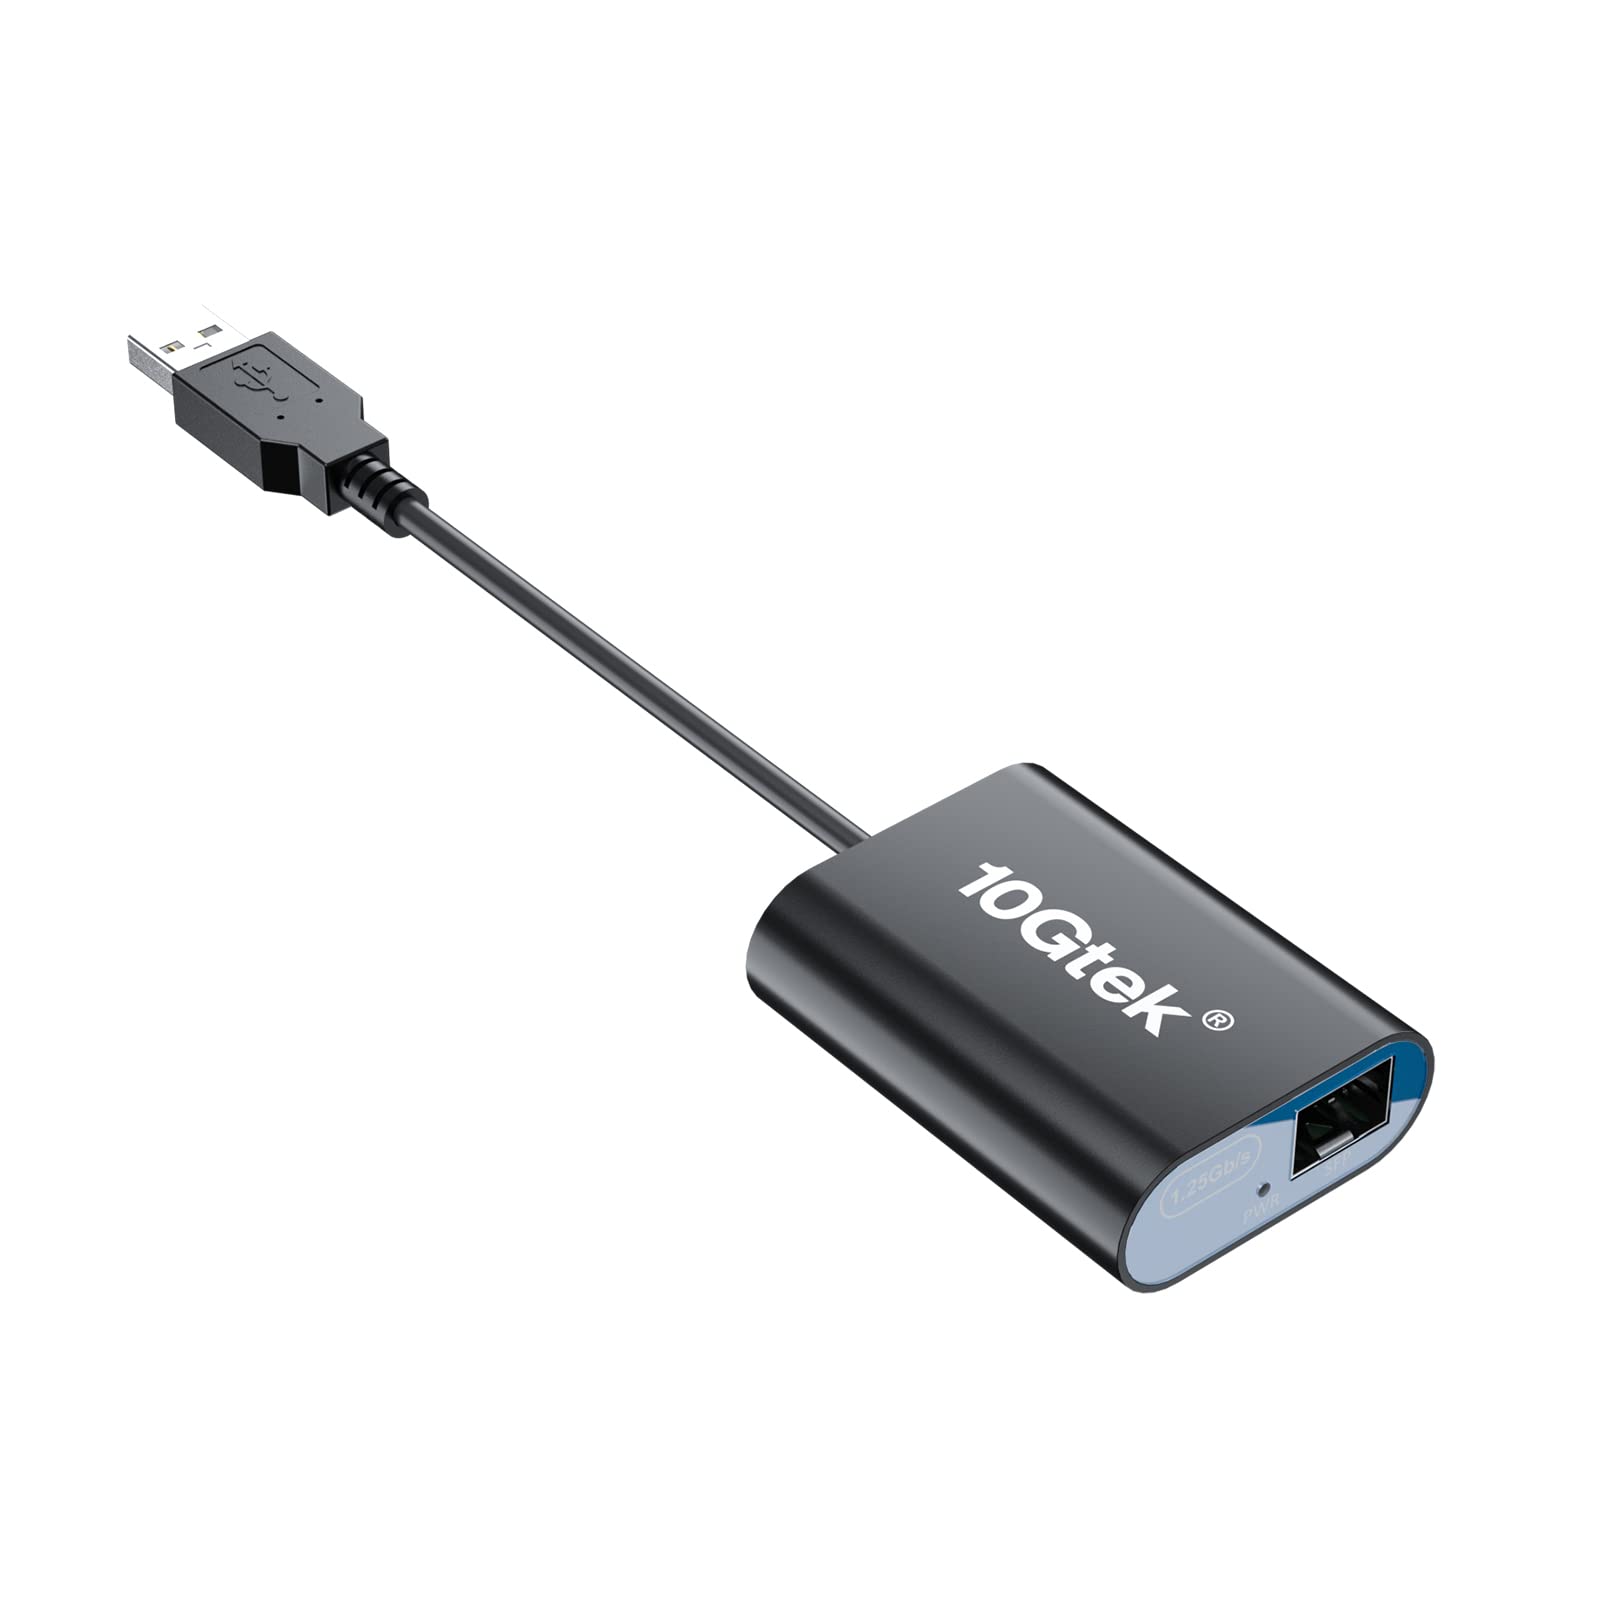 Alwong USB3.0 to SFP 1000Mbps Gigabit Ethernet Adapter